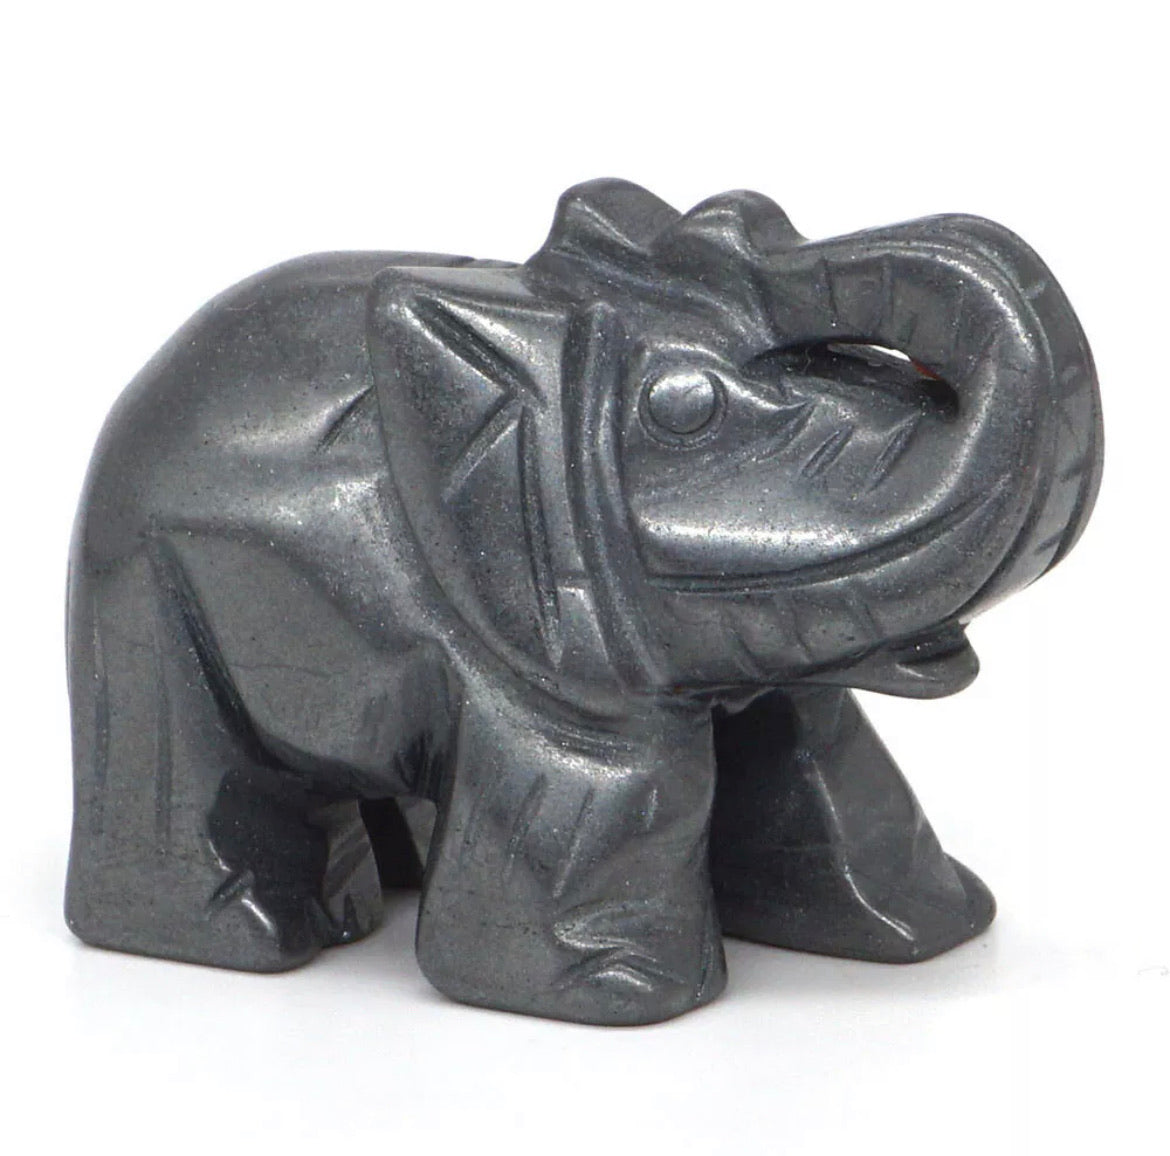 Elephant Figurine carved in Natural Hematite gemstone